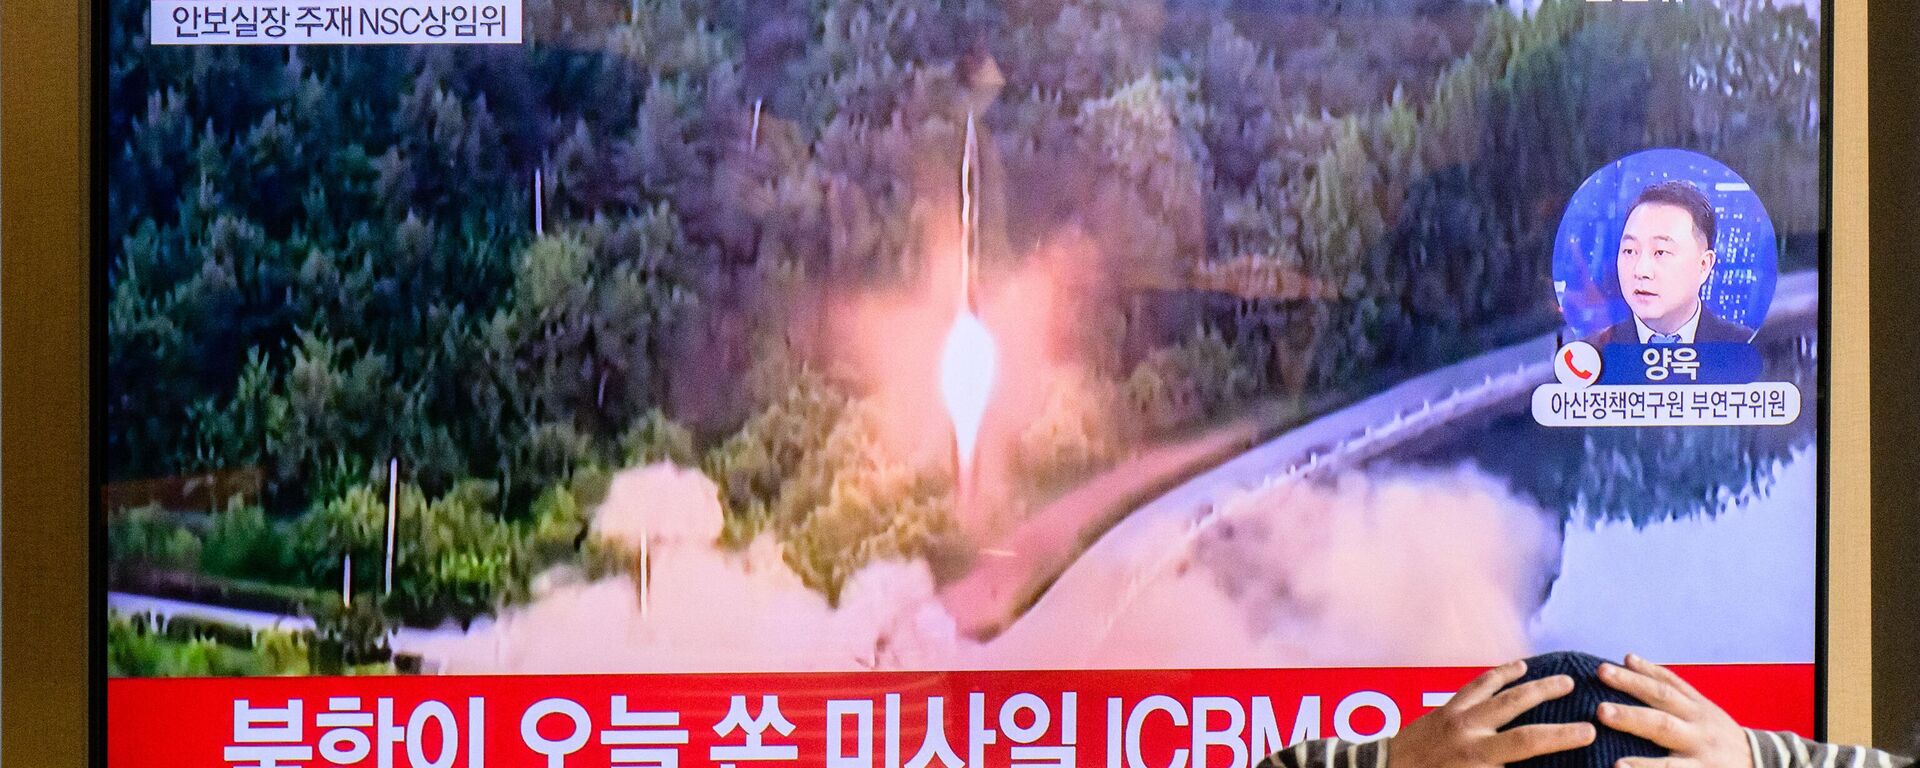 Corea del Norte lanza un misil balístico intercontinental (ICBM)  - Sputnik Mundo, 1920, 18.11.2022